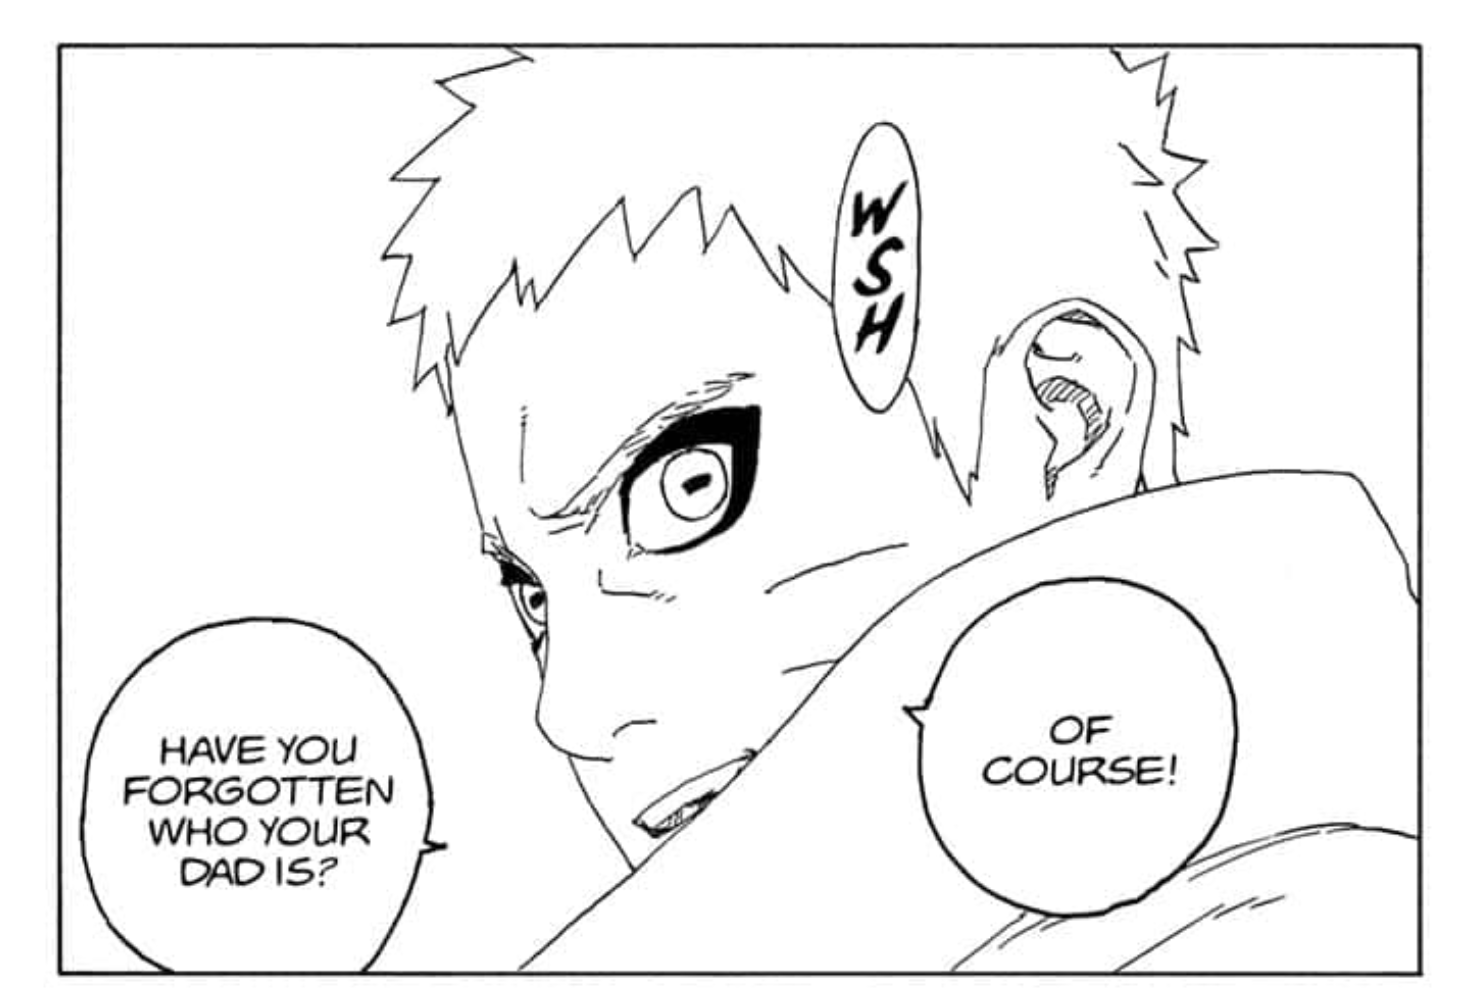 Naruto upgrades his Sage Mode in the Boruto manga